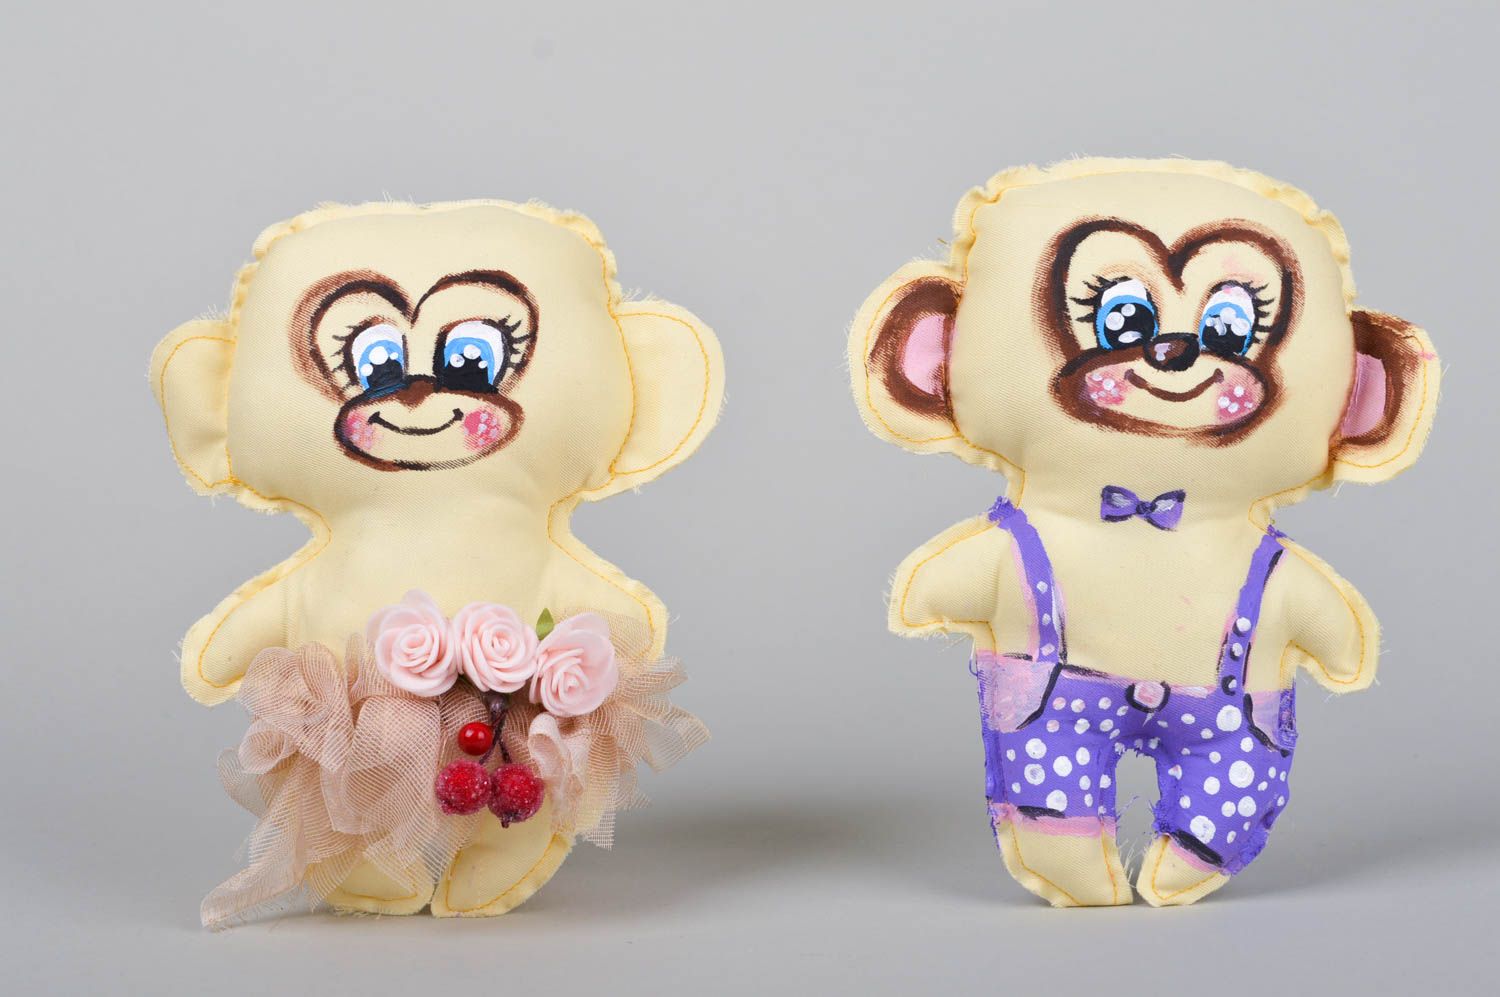 Handmade soft toys nursery ideas present for children stuffed toys for babies photo 1